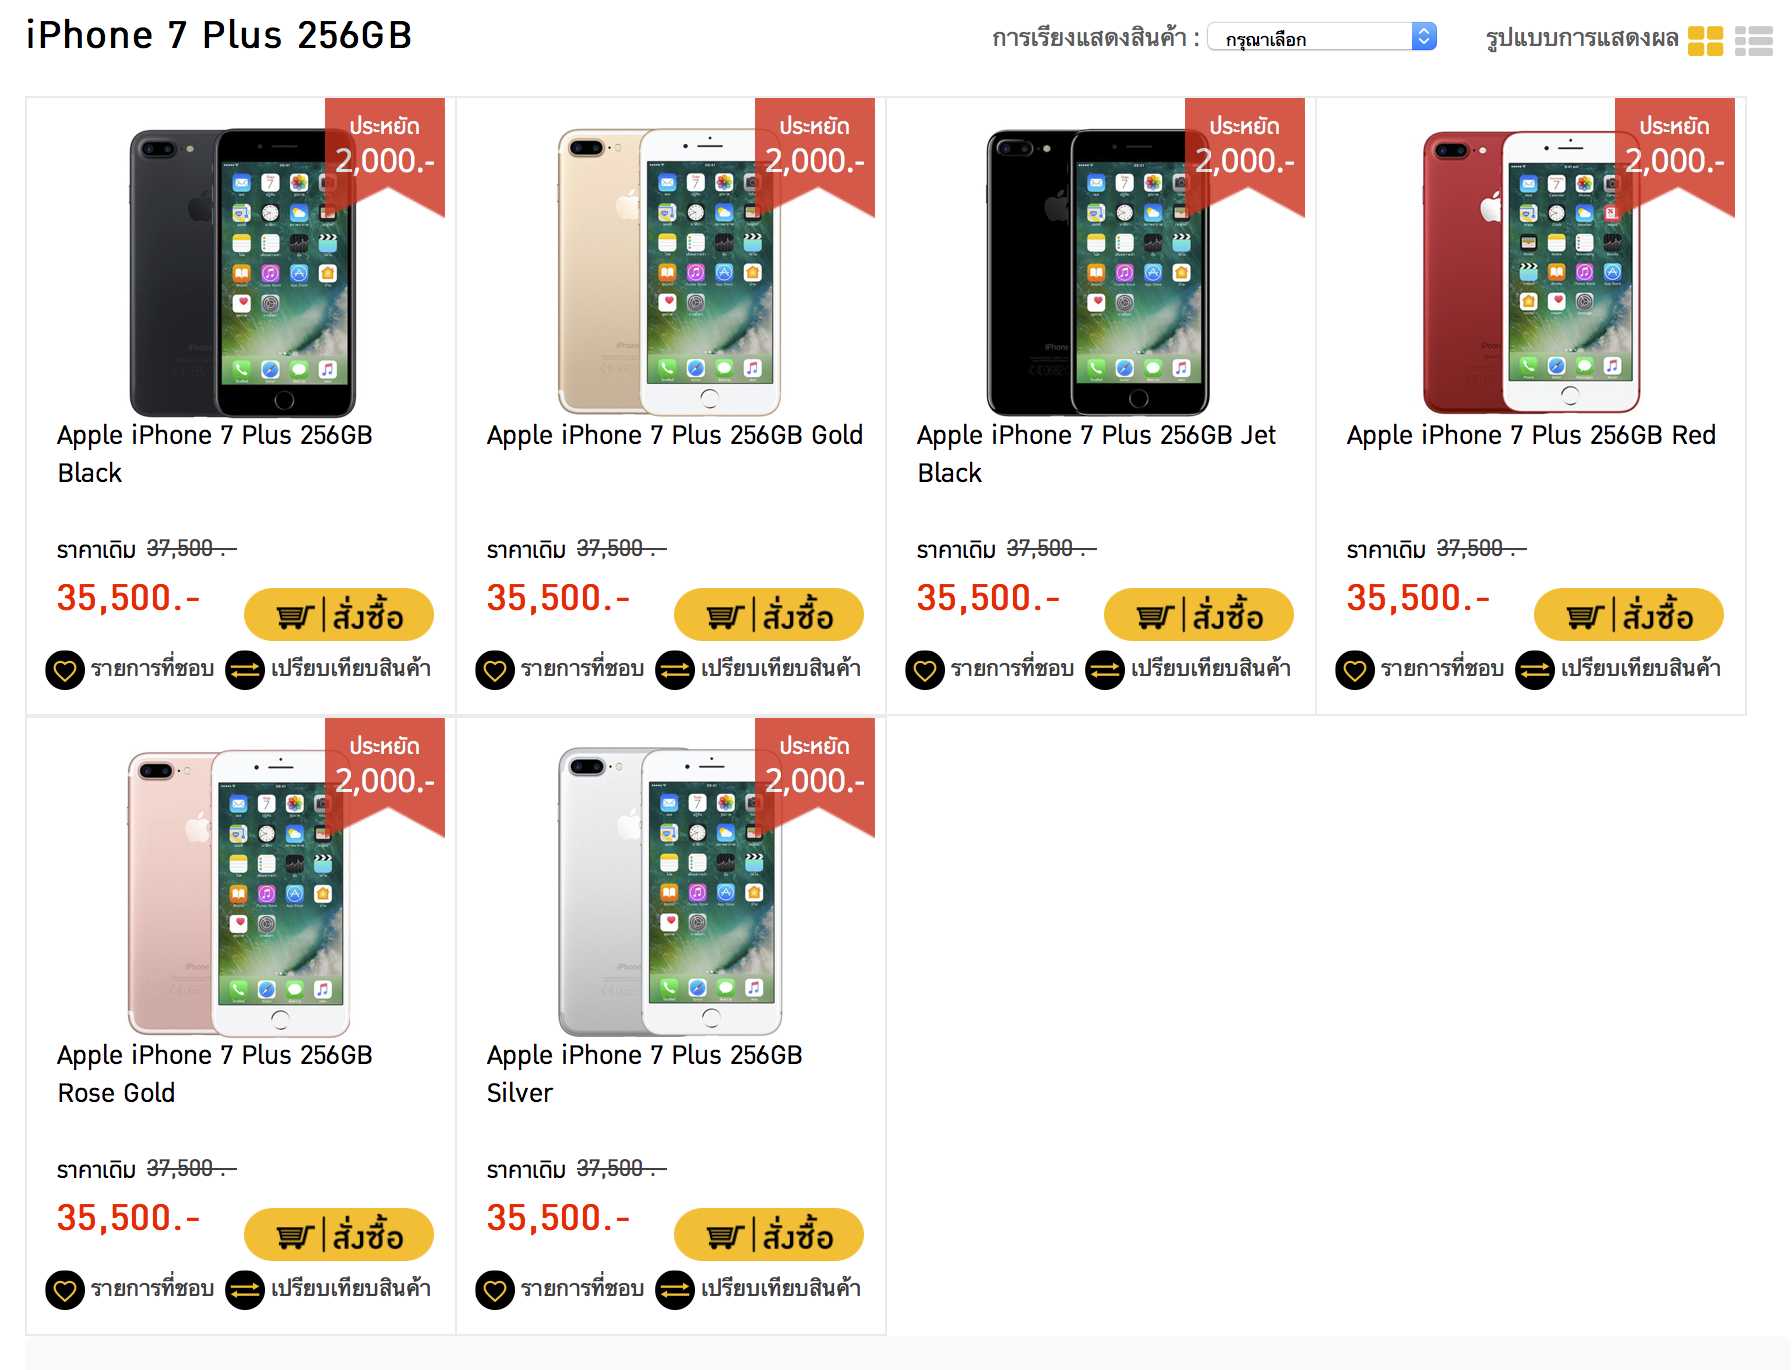 [Promotion] iPhone 7 Plus เครื่องเปล่า 256 GB ราคาดีที่สุด ที่ BananaStore ลดเลย 2,000 บาท!!